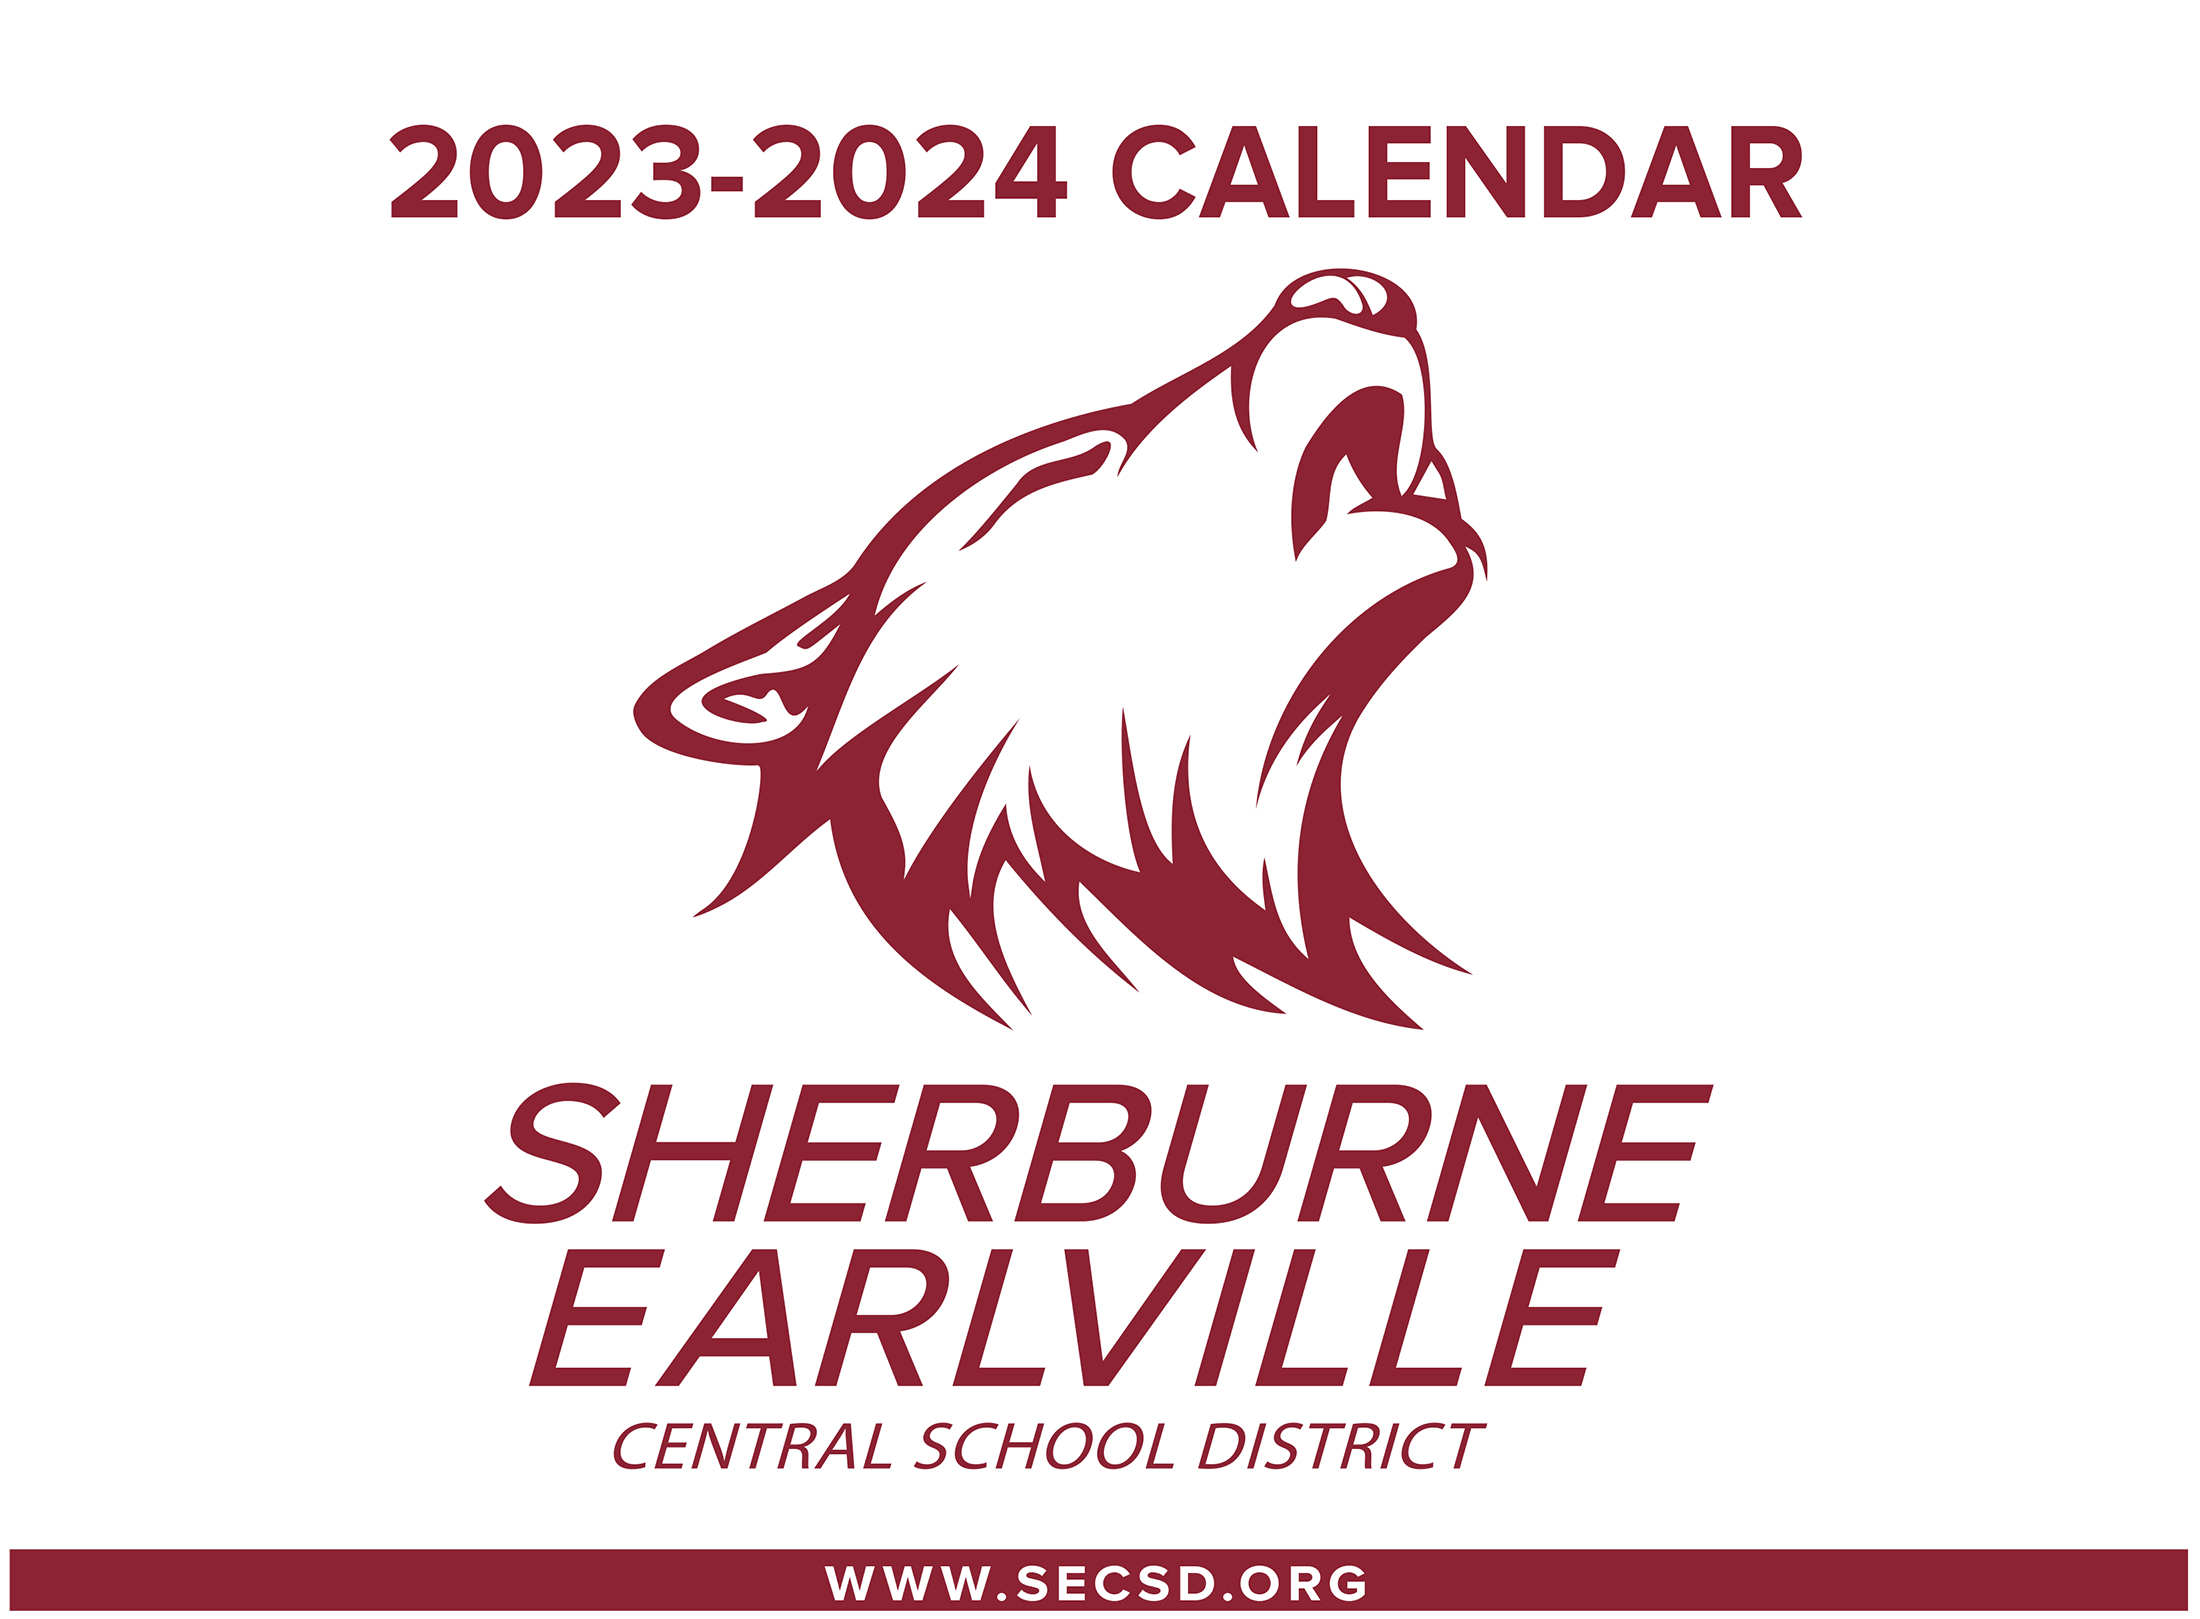 SECSD 2023-2024 District Calendar Cover